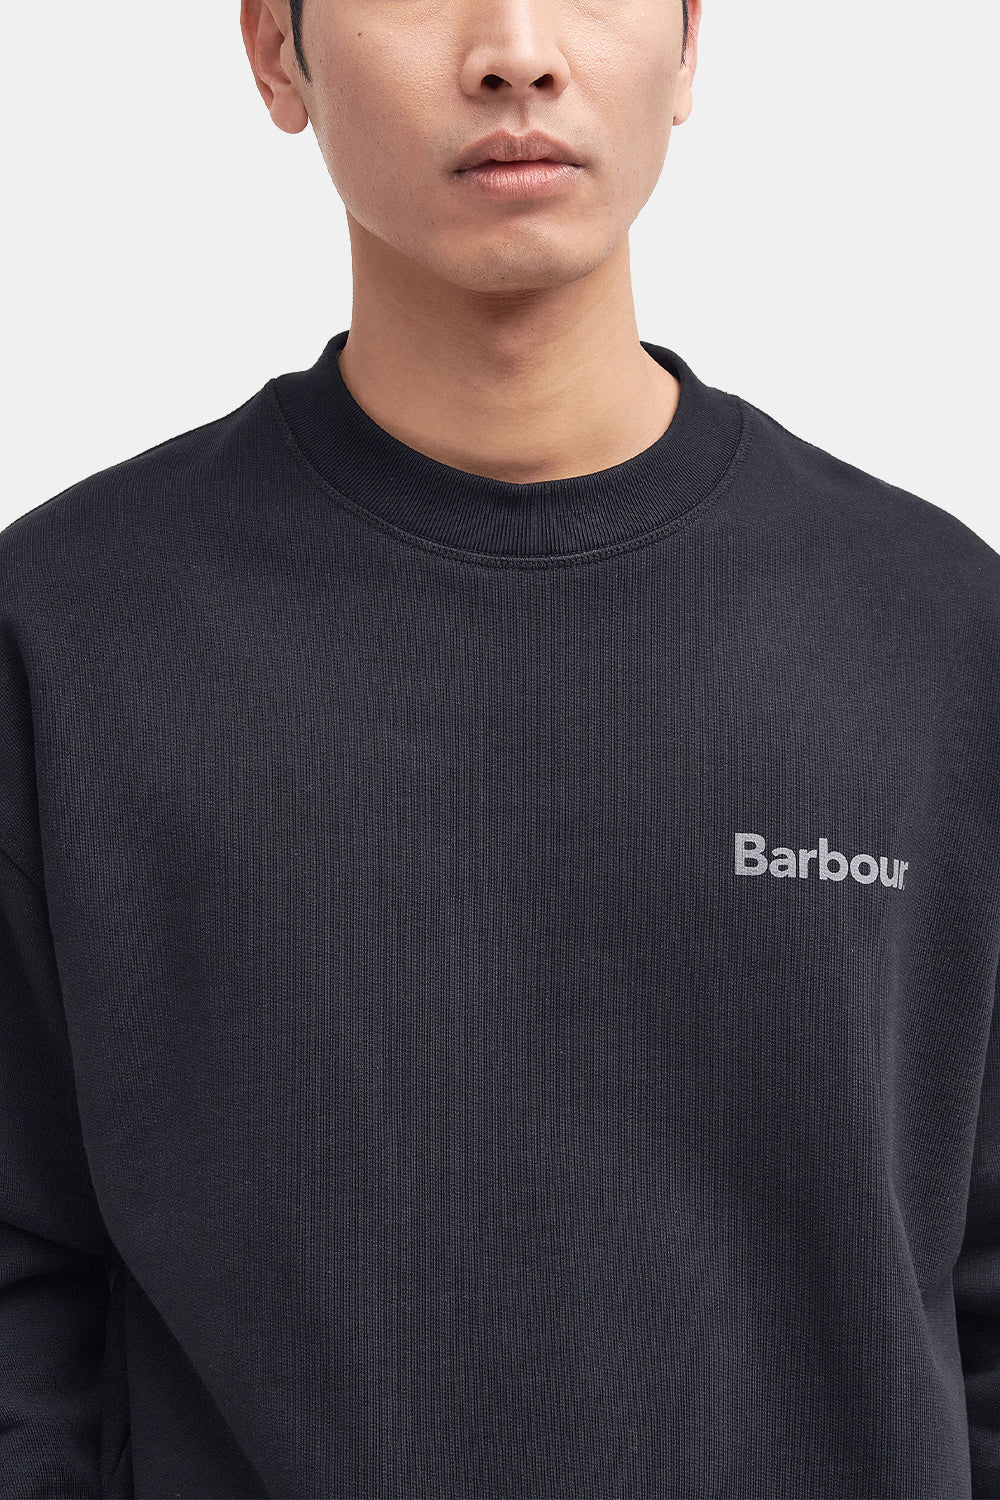 Barbour Nicholas Crew Sweatshirt (Black) Collar